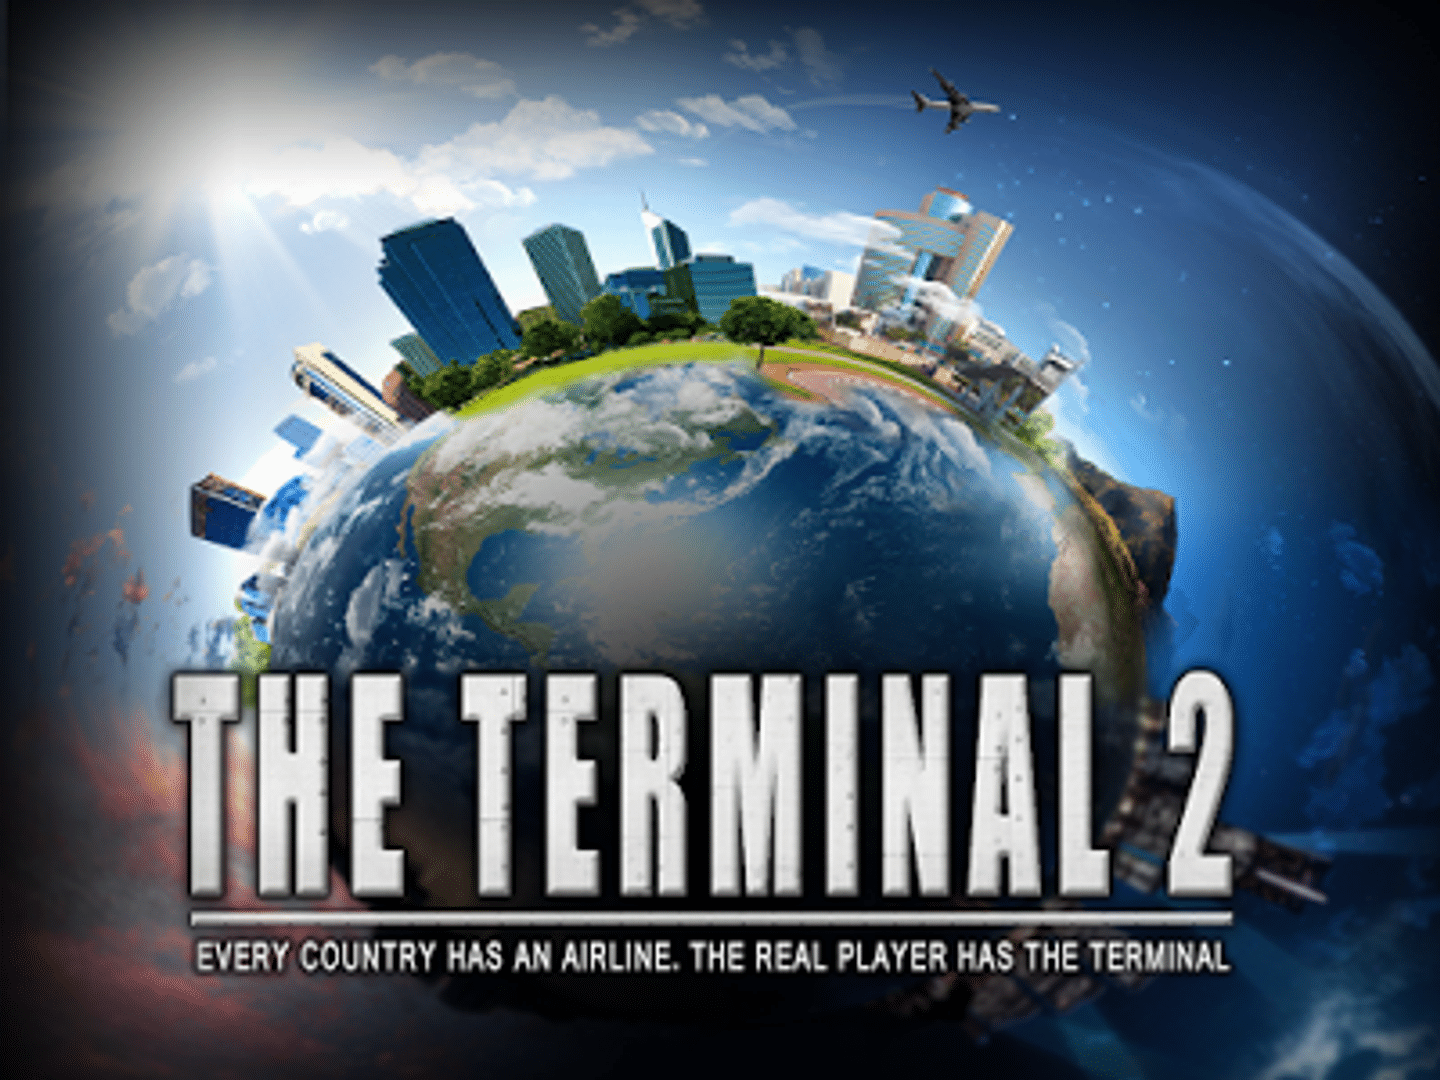 Terminus game. The Terminal 2. Term 2. Terminal game